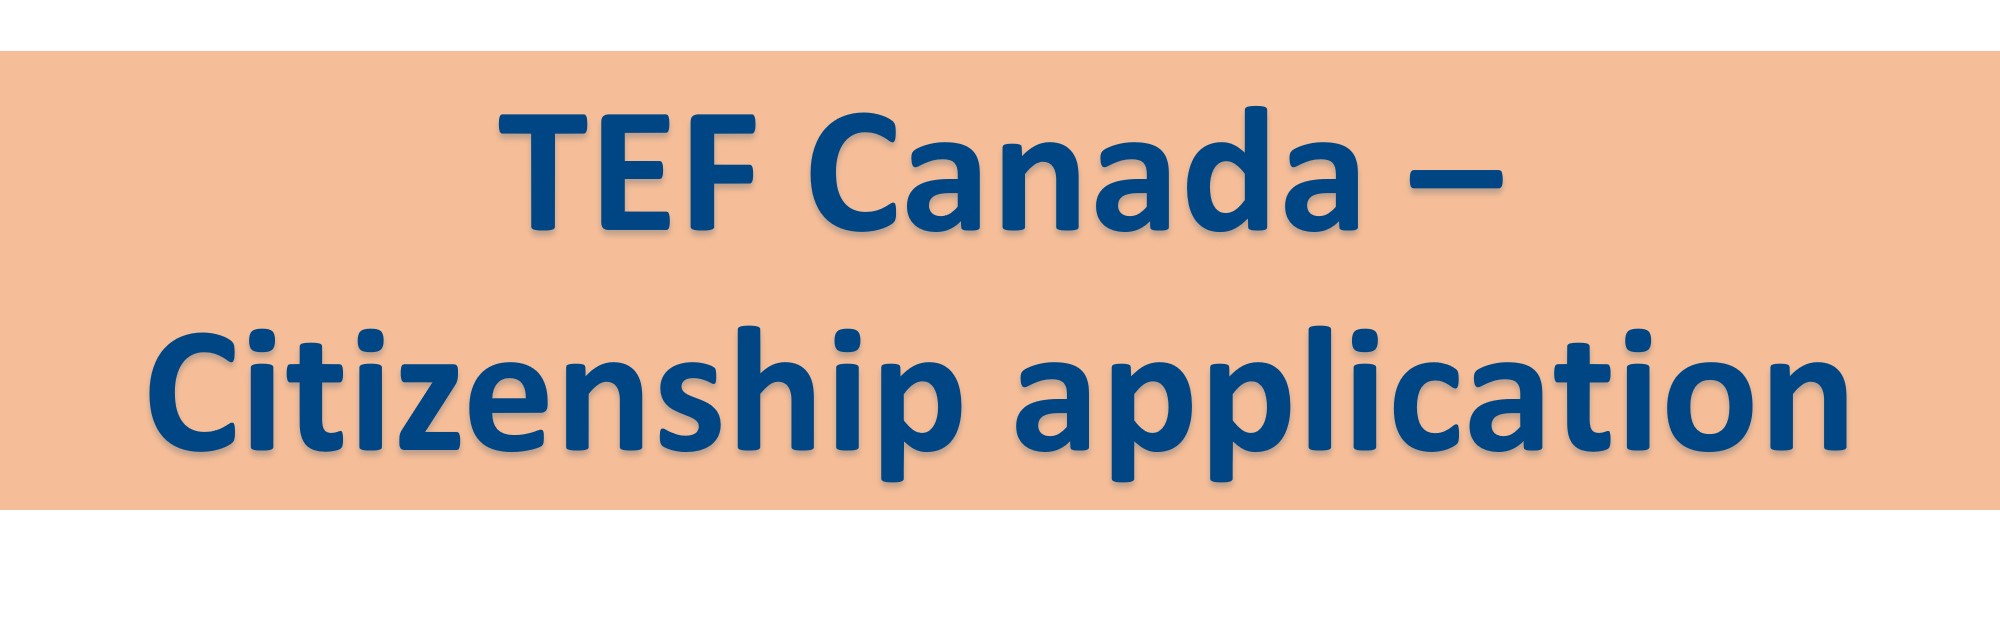 TEF Canada - Citizenship application